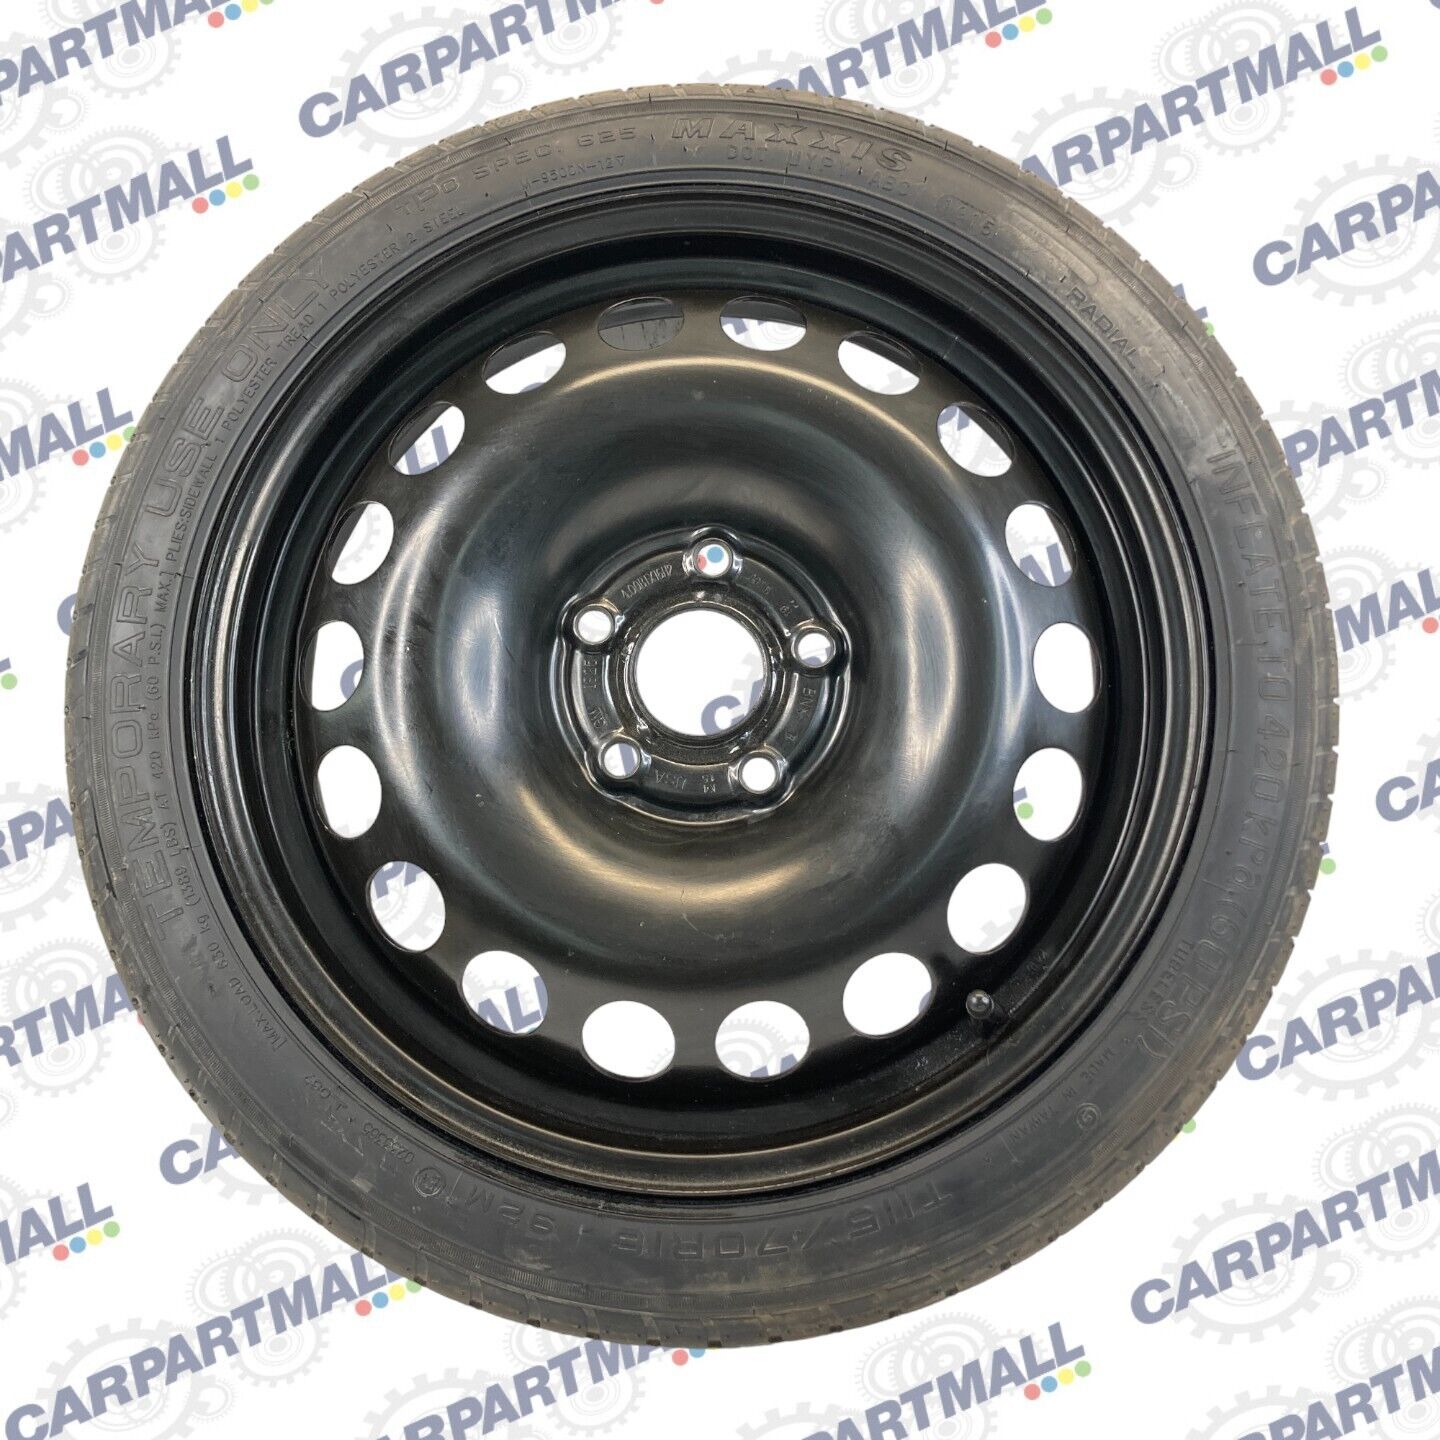 2014-2019 Ford Fiesta Spare Tire Rim Wheel Compact Donut T115/70/R16